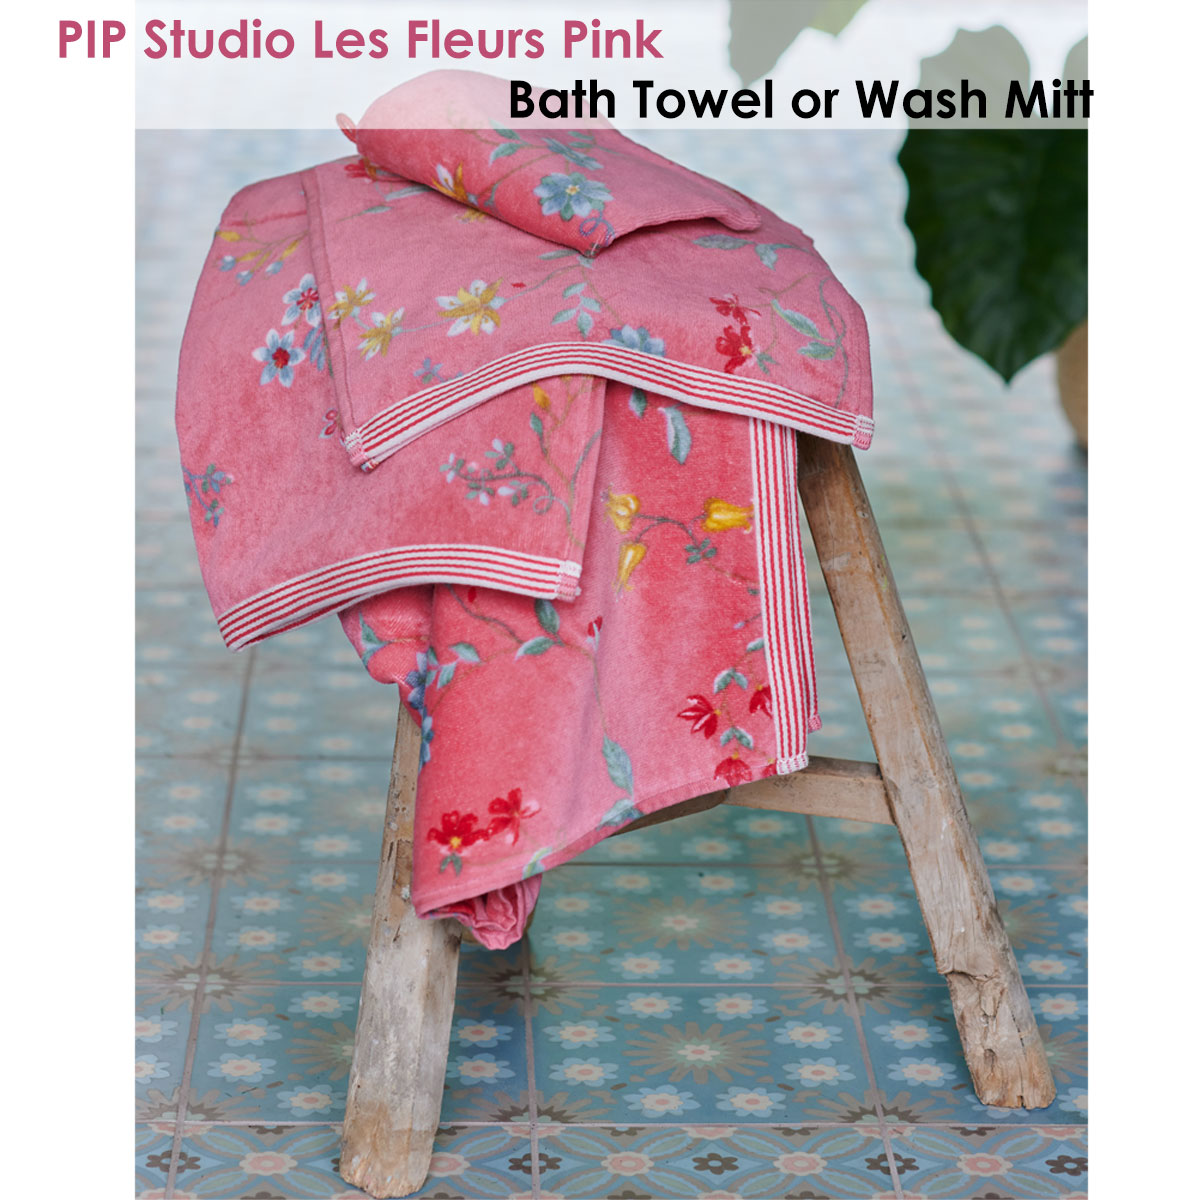 Les Fleurs Pink Bath Towel or Wash Mitt by PIP Studio